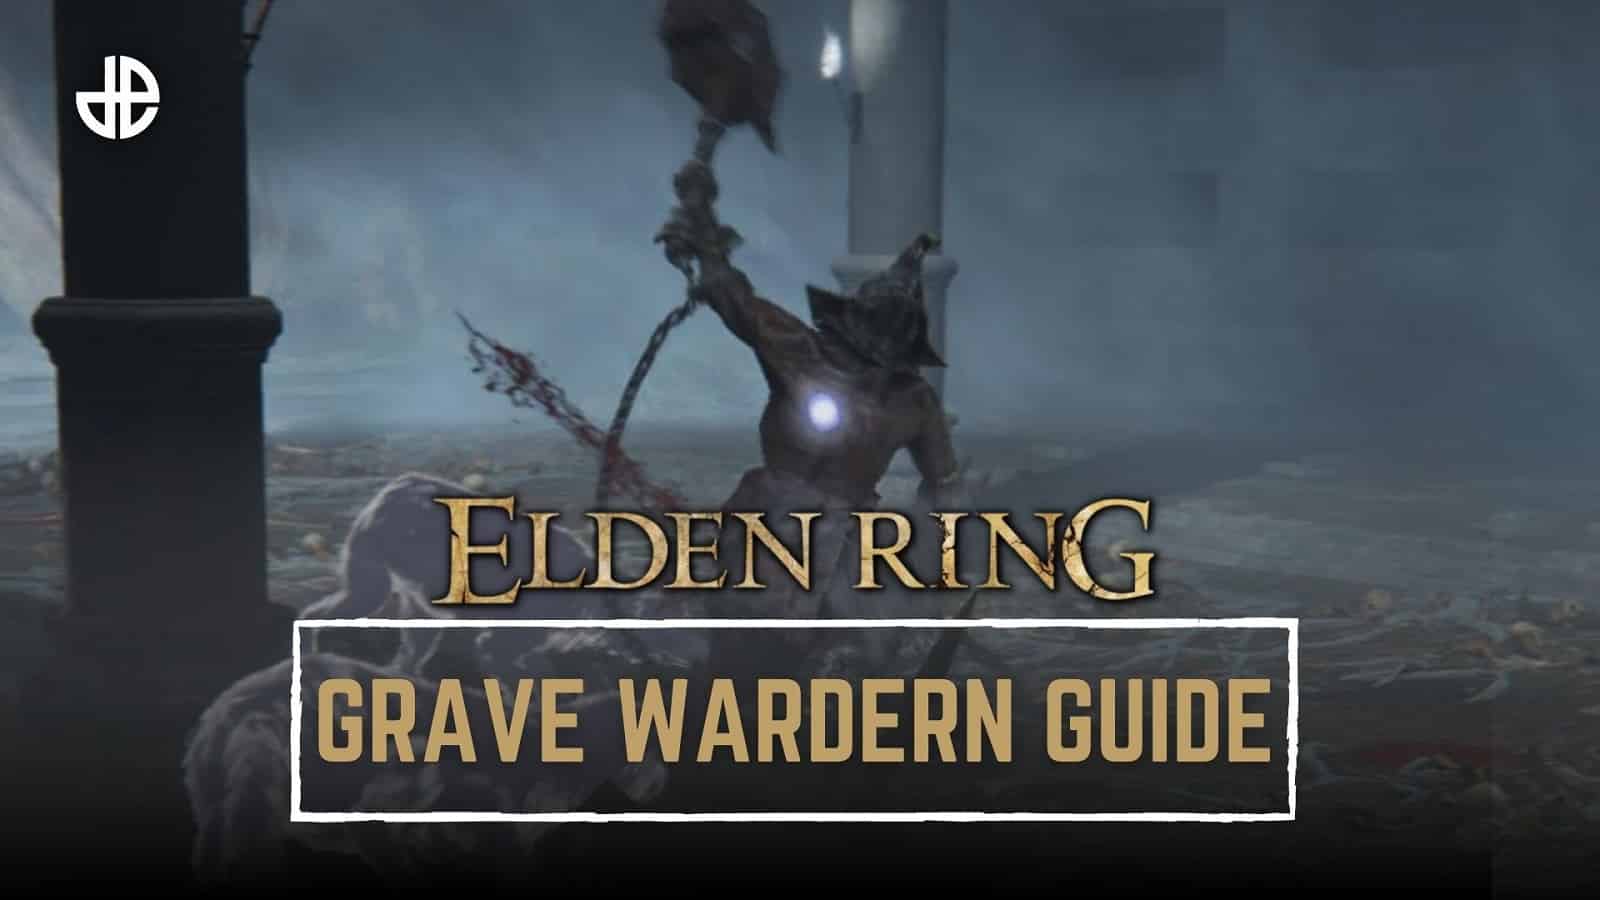 Grave Warden boss fight in Elden Ring